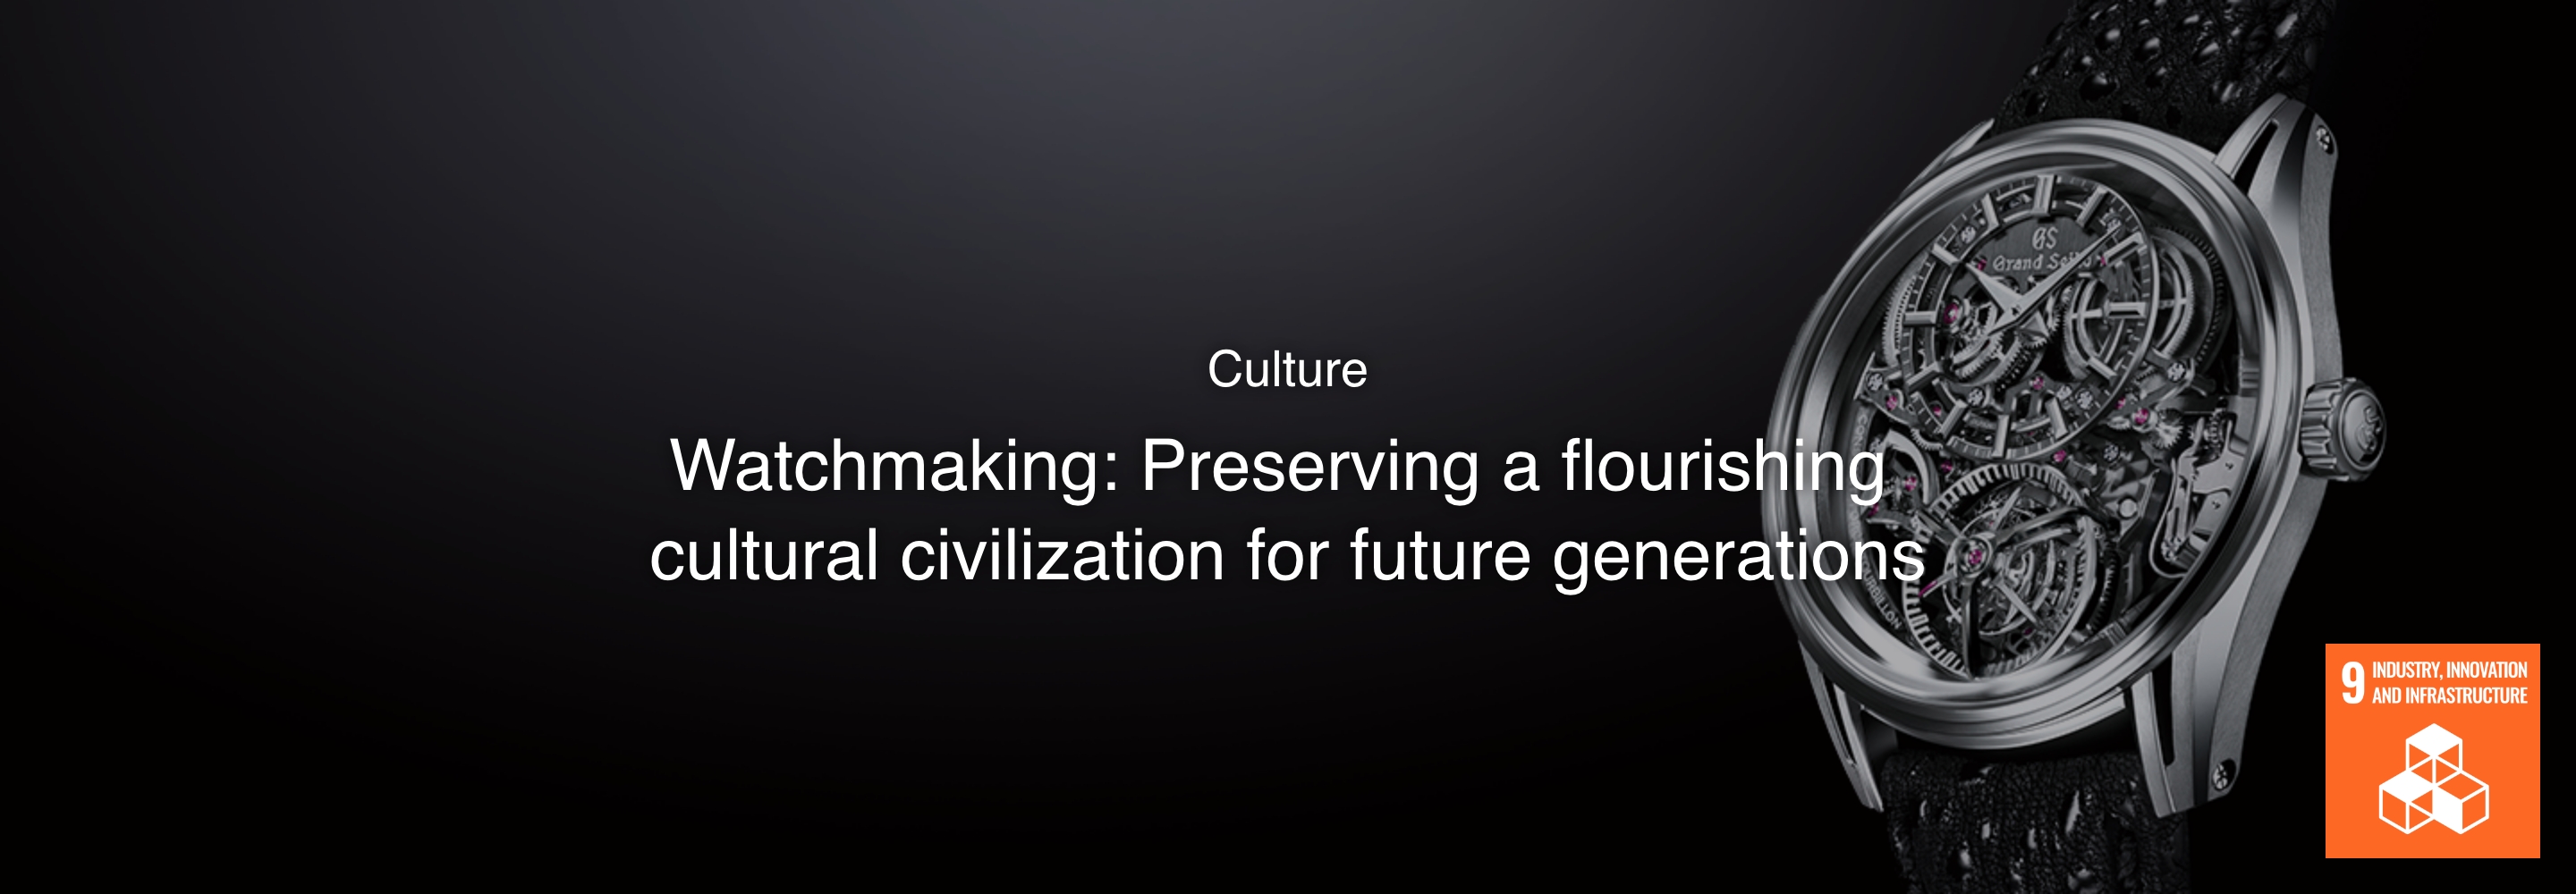 Culture 得以傳承後世的製錶文化